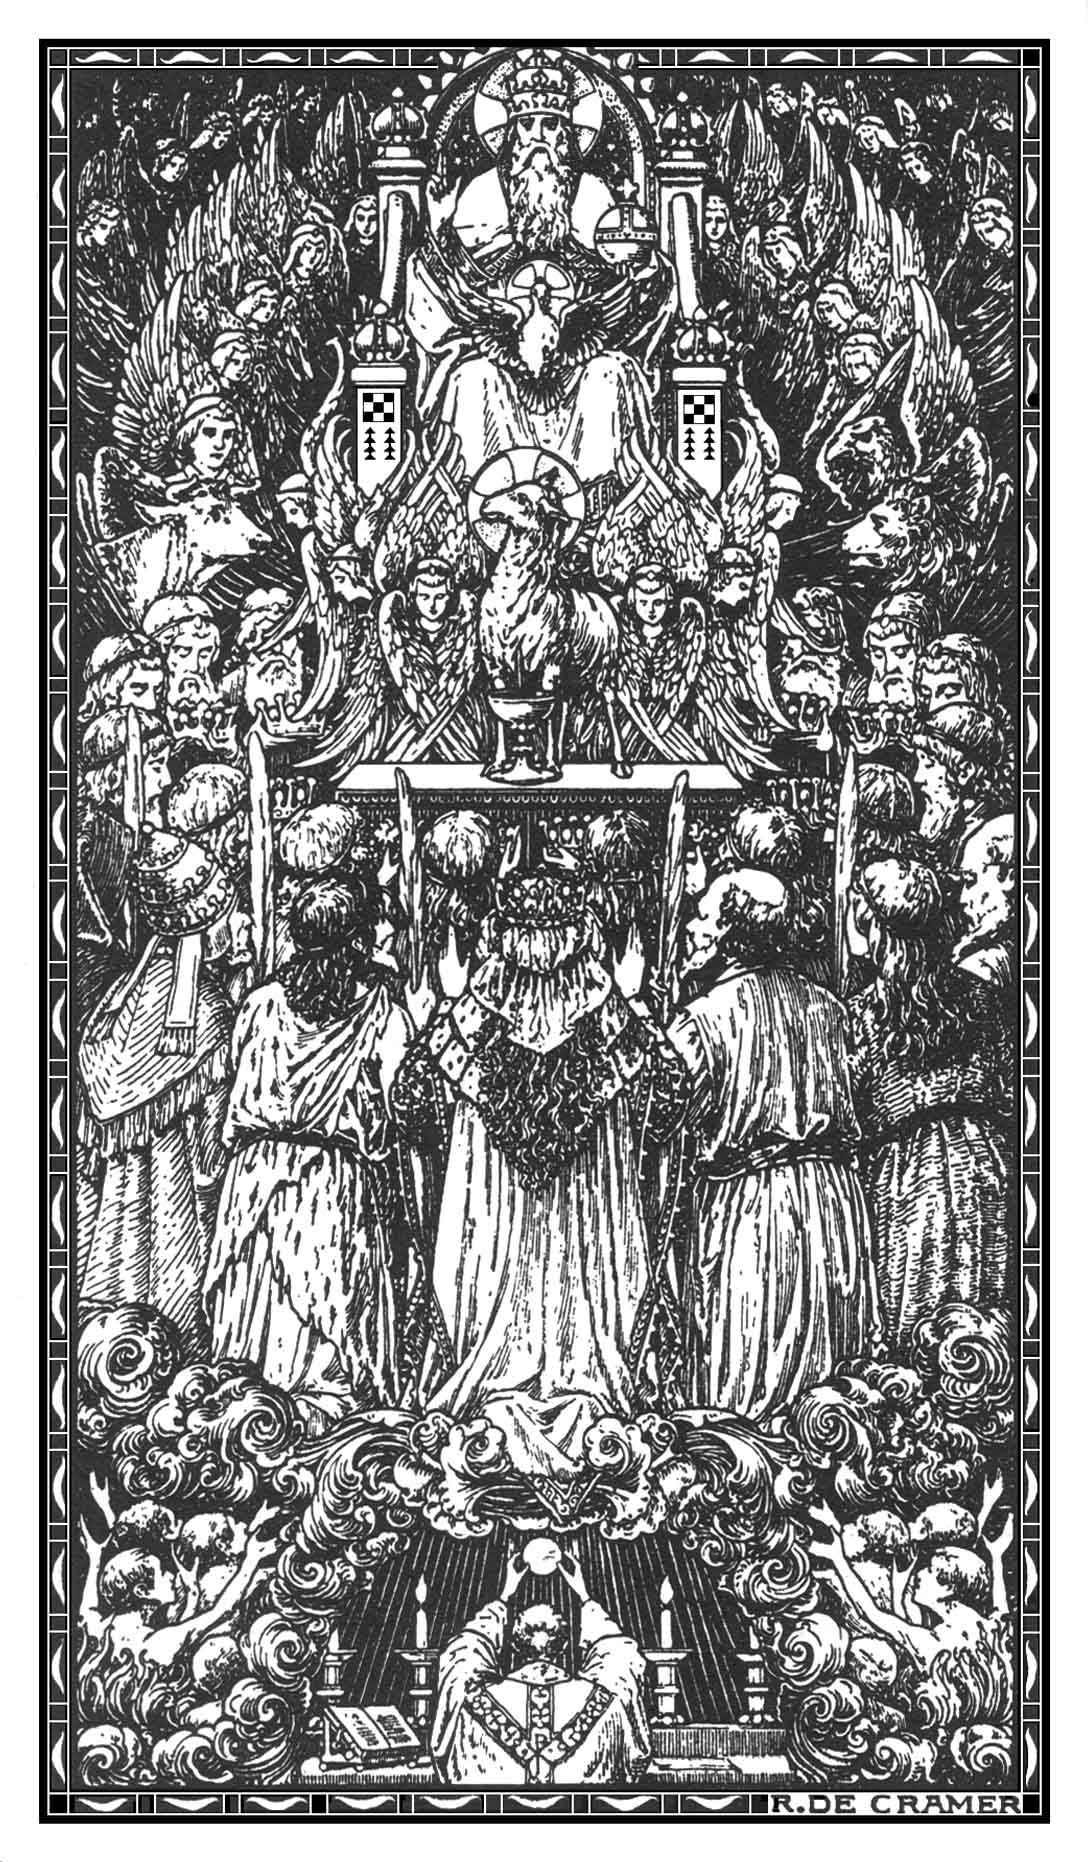 rosary in latin